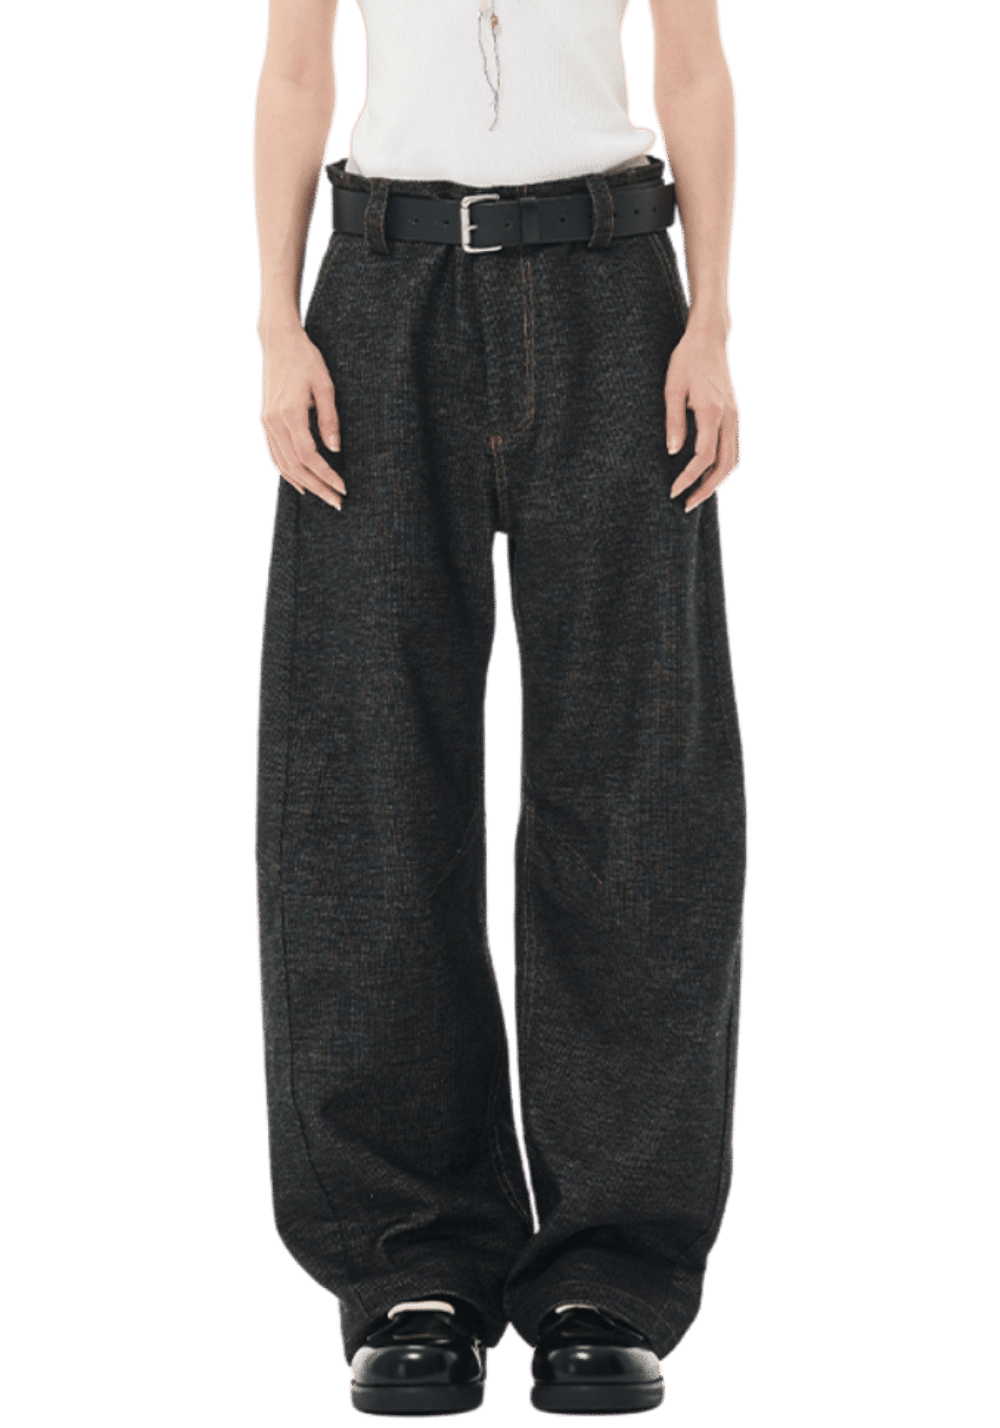 Denim Style Casual Pants - PSYLOS 1, Denim Style Casual Pants, Pants, MODITEC, PSYLOS 1